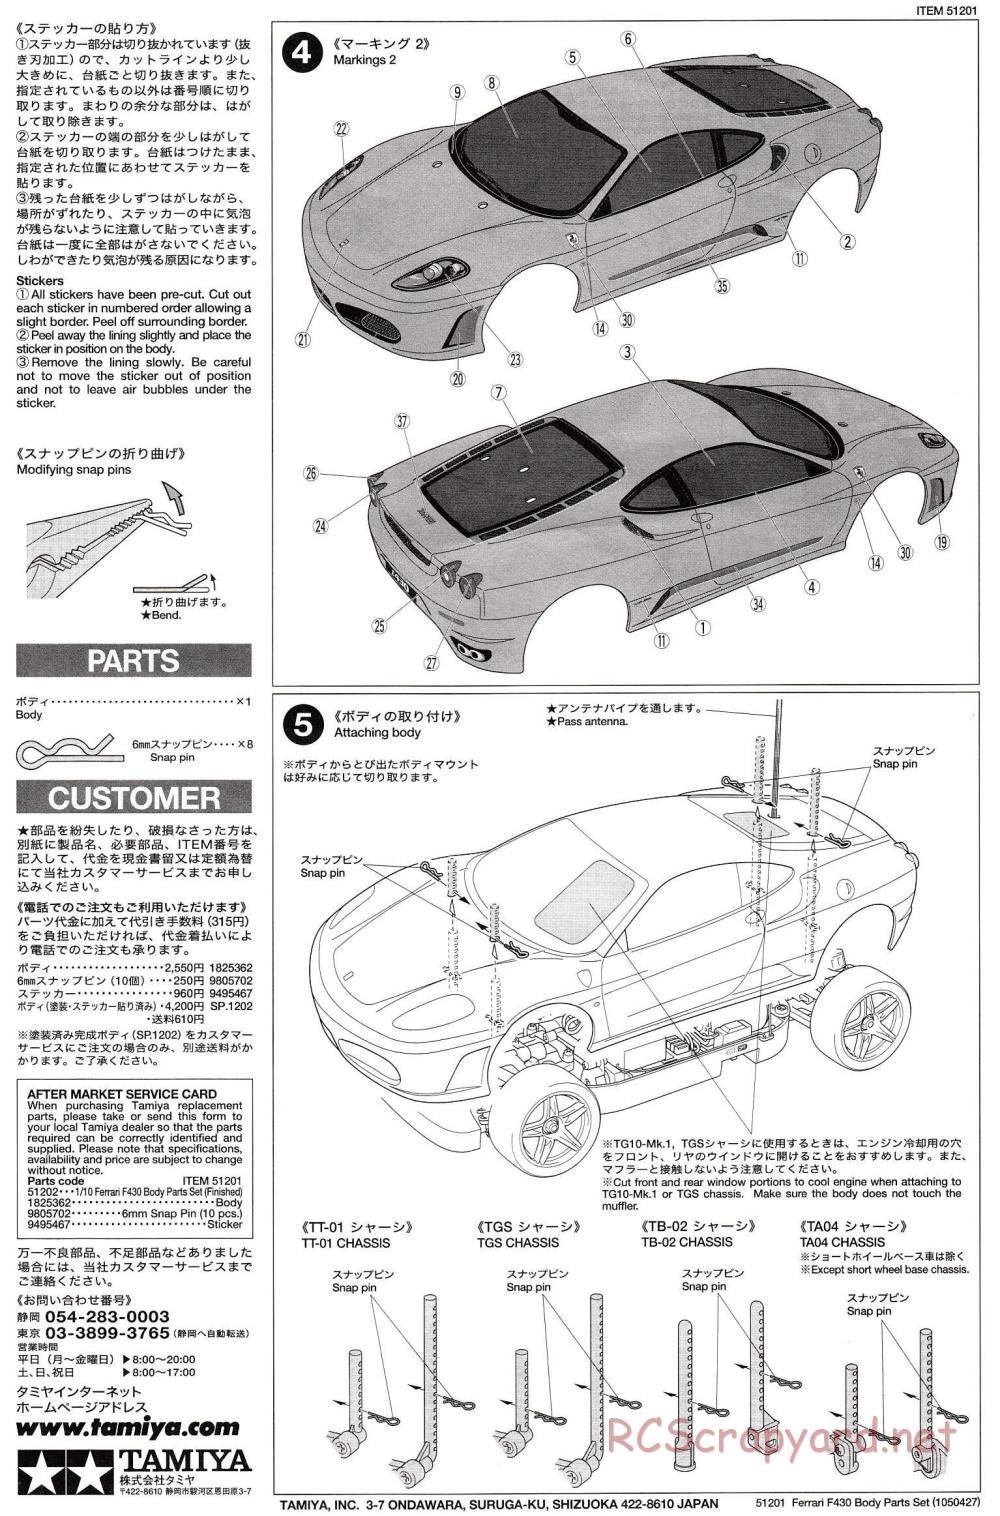 Tamiya - Ferrari F430 - TA05 Chassis - Body Manual - Page 2